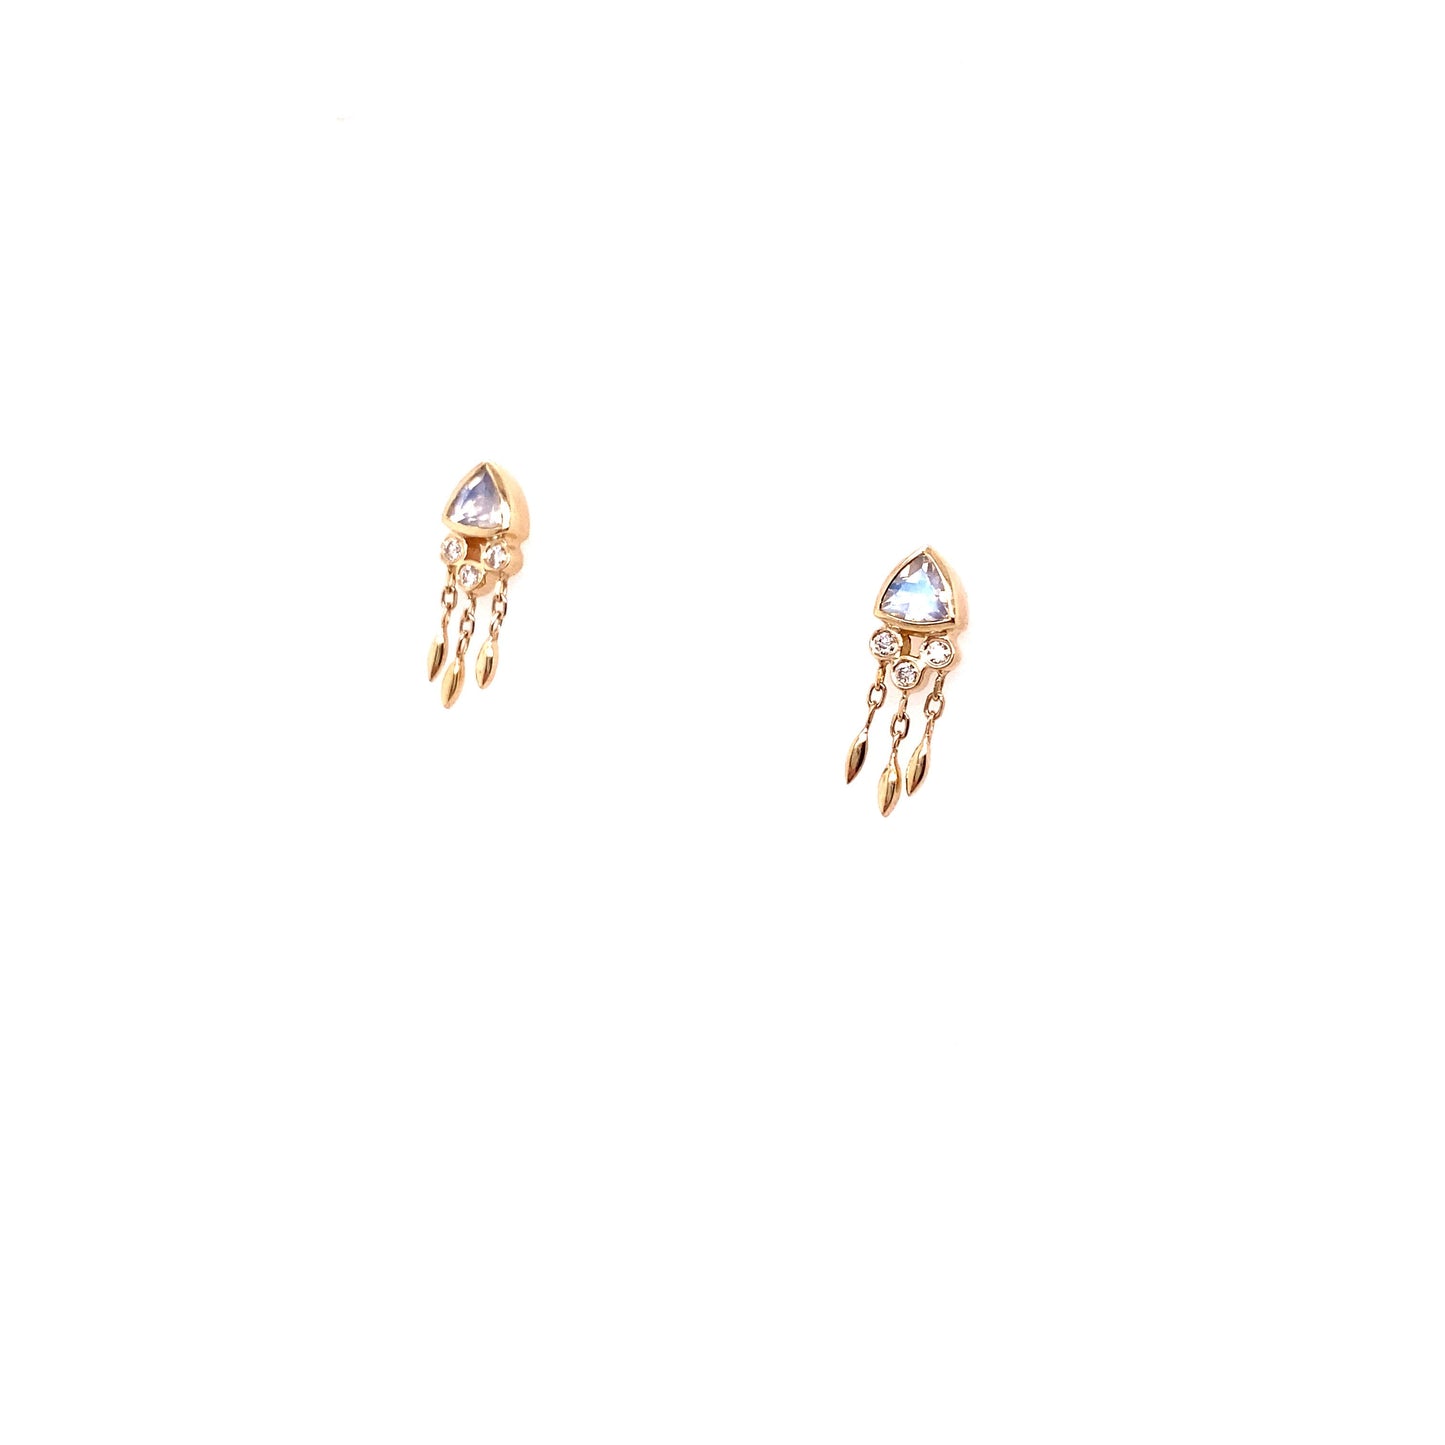 Celine Daoust 14kt Trylian Moonstone and Diamond Fringe Stud Earrings